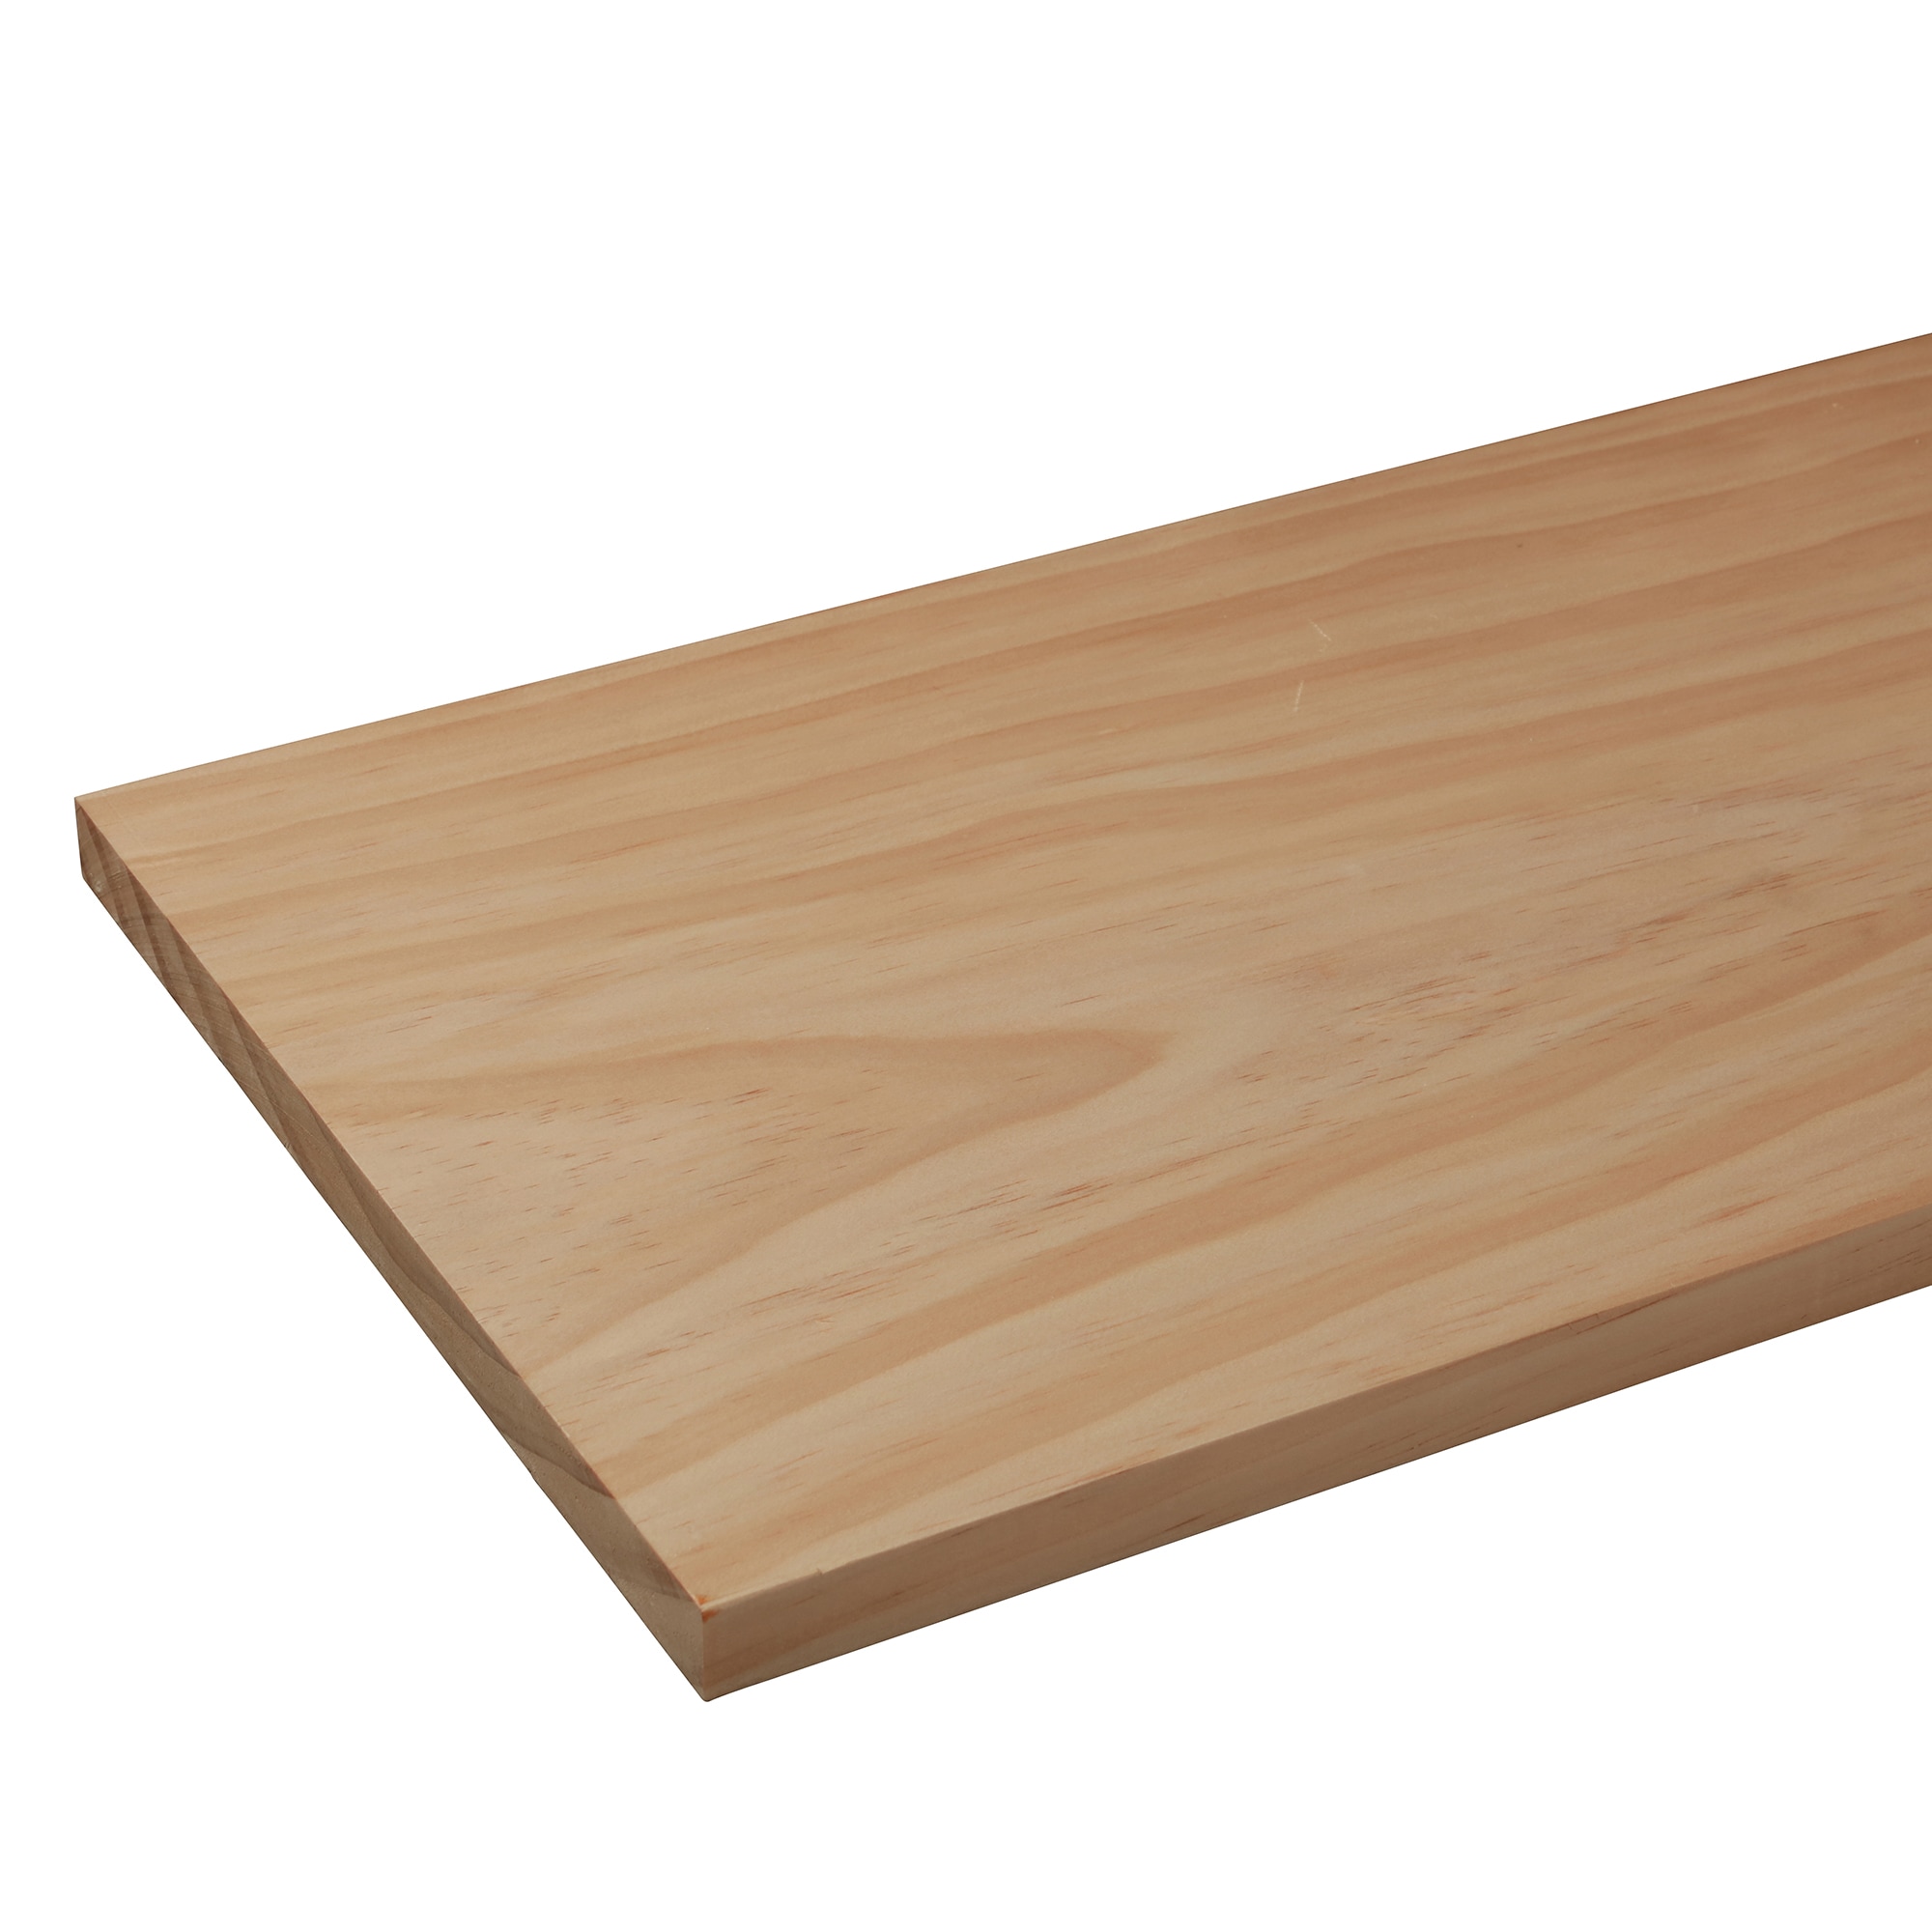 decorative wood board 13in x 6in, Five Below